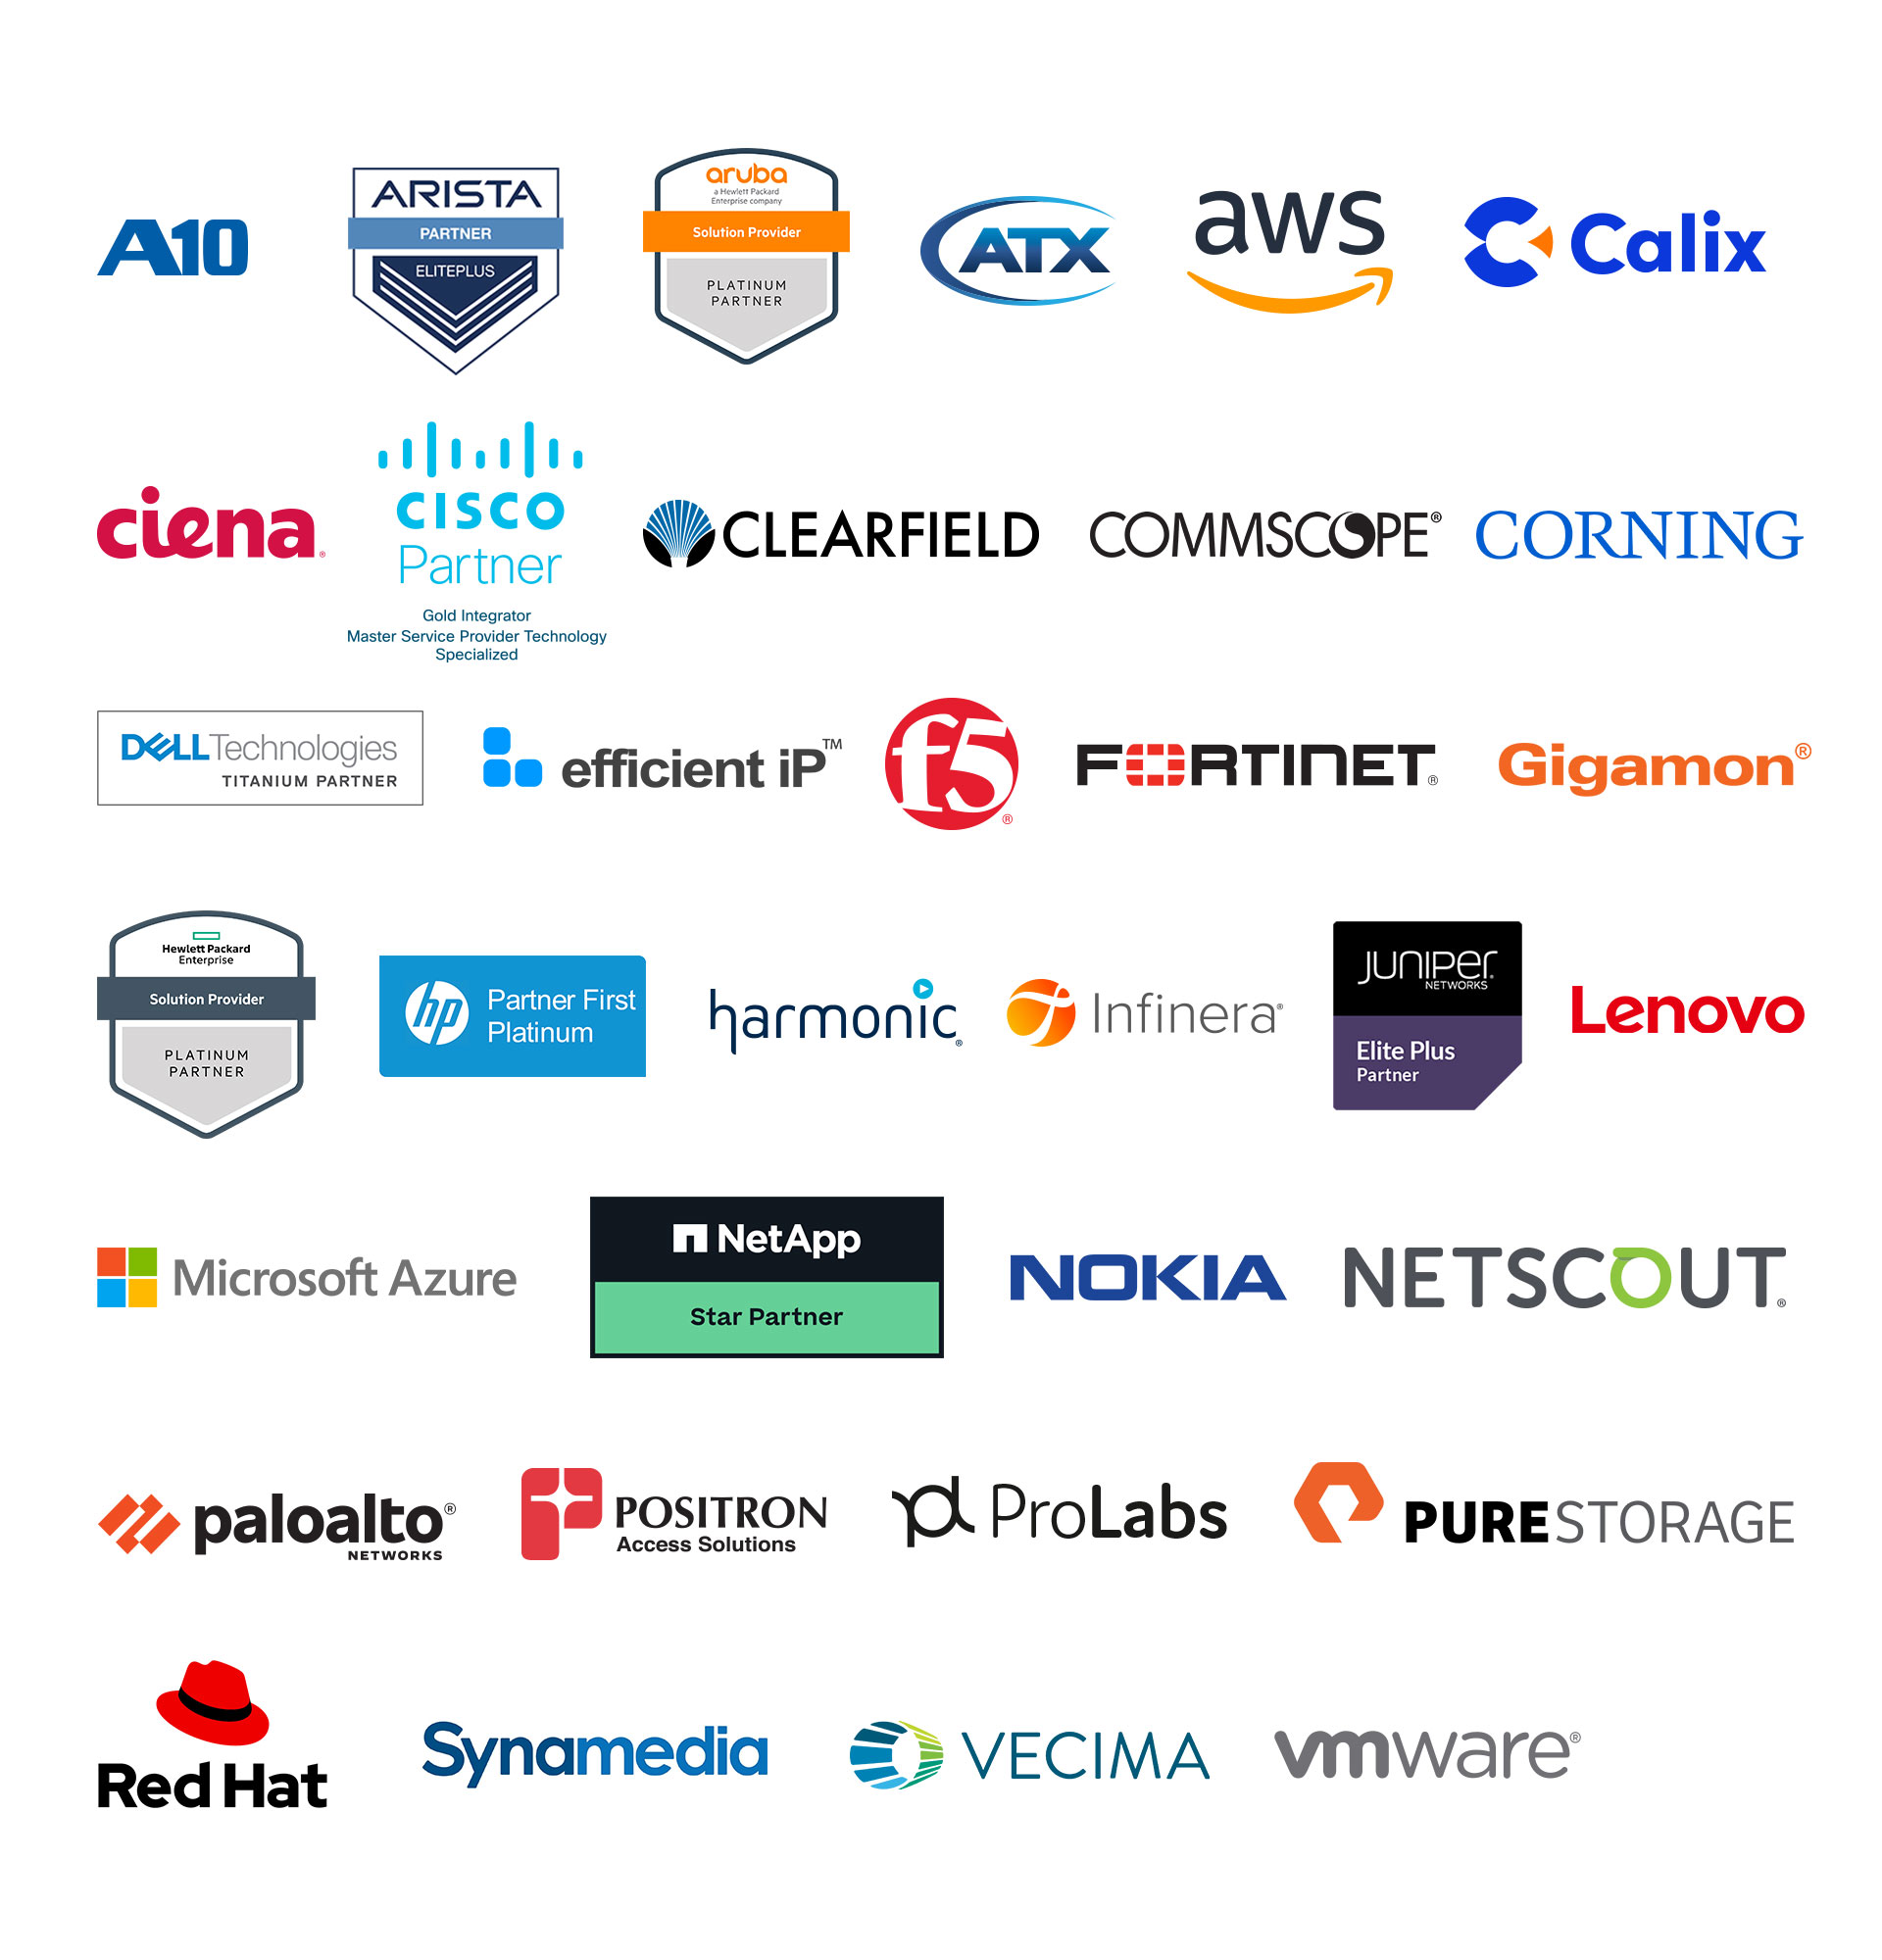 ePlus technology partners